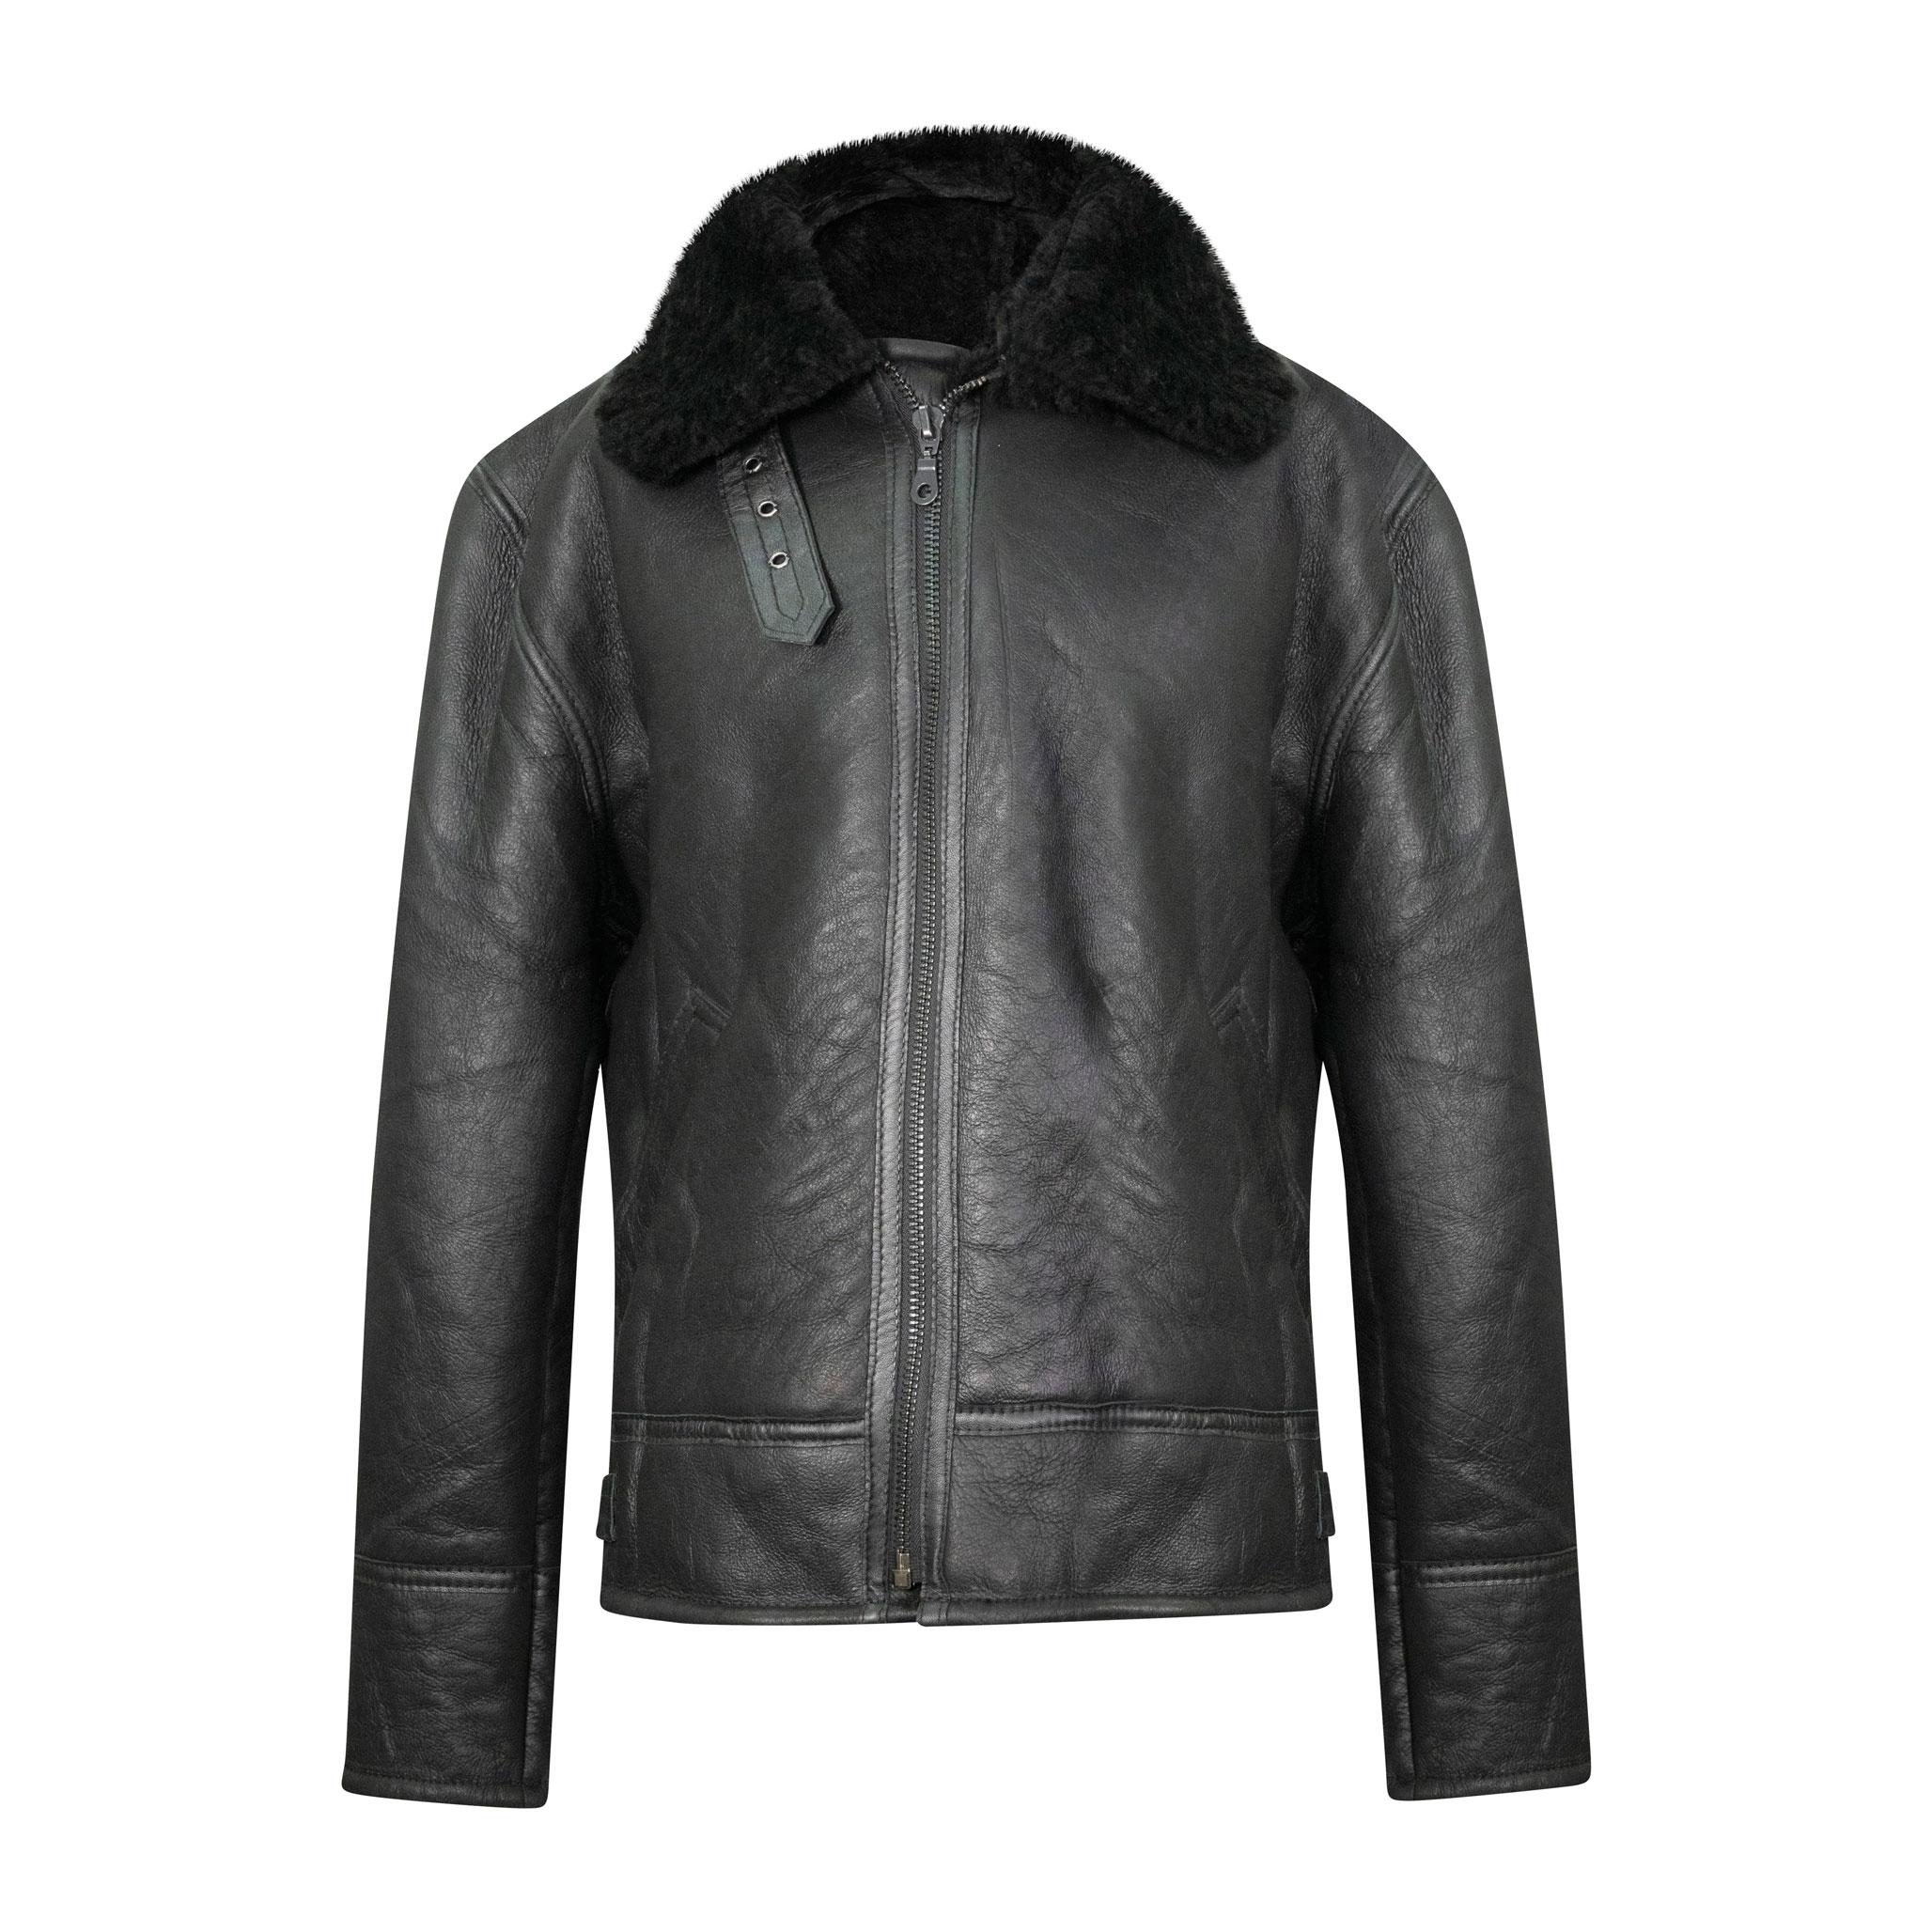 A thick sheepskin jacket in full black, waist length